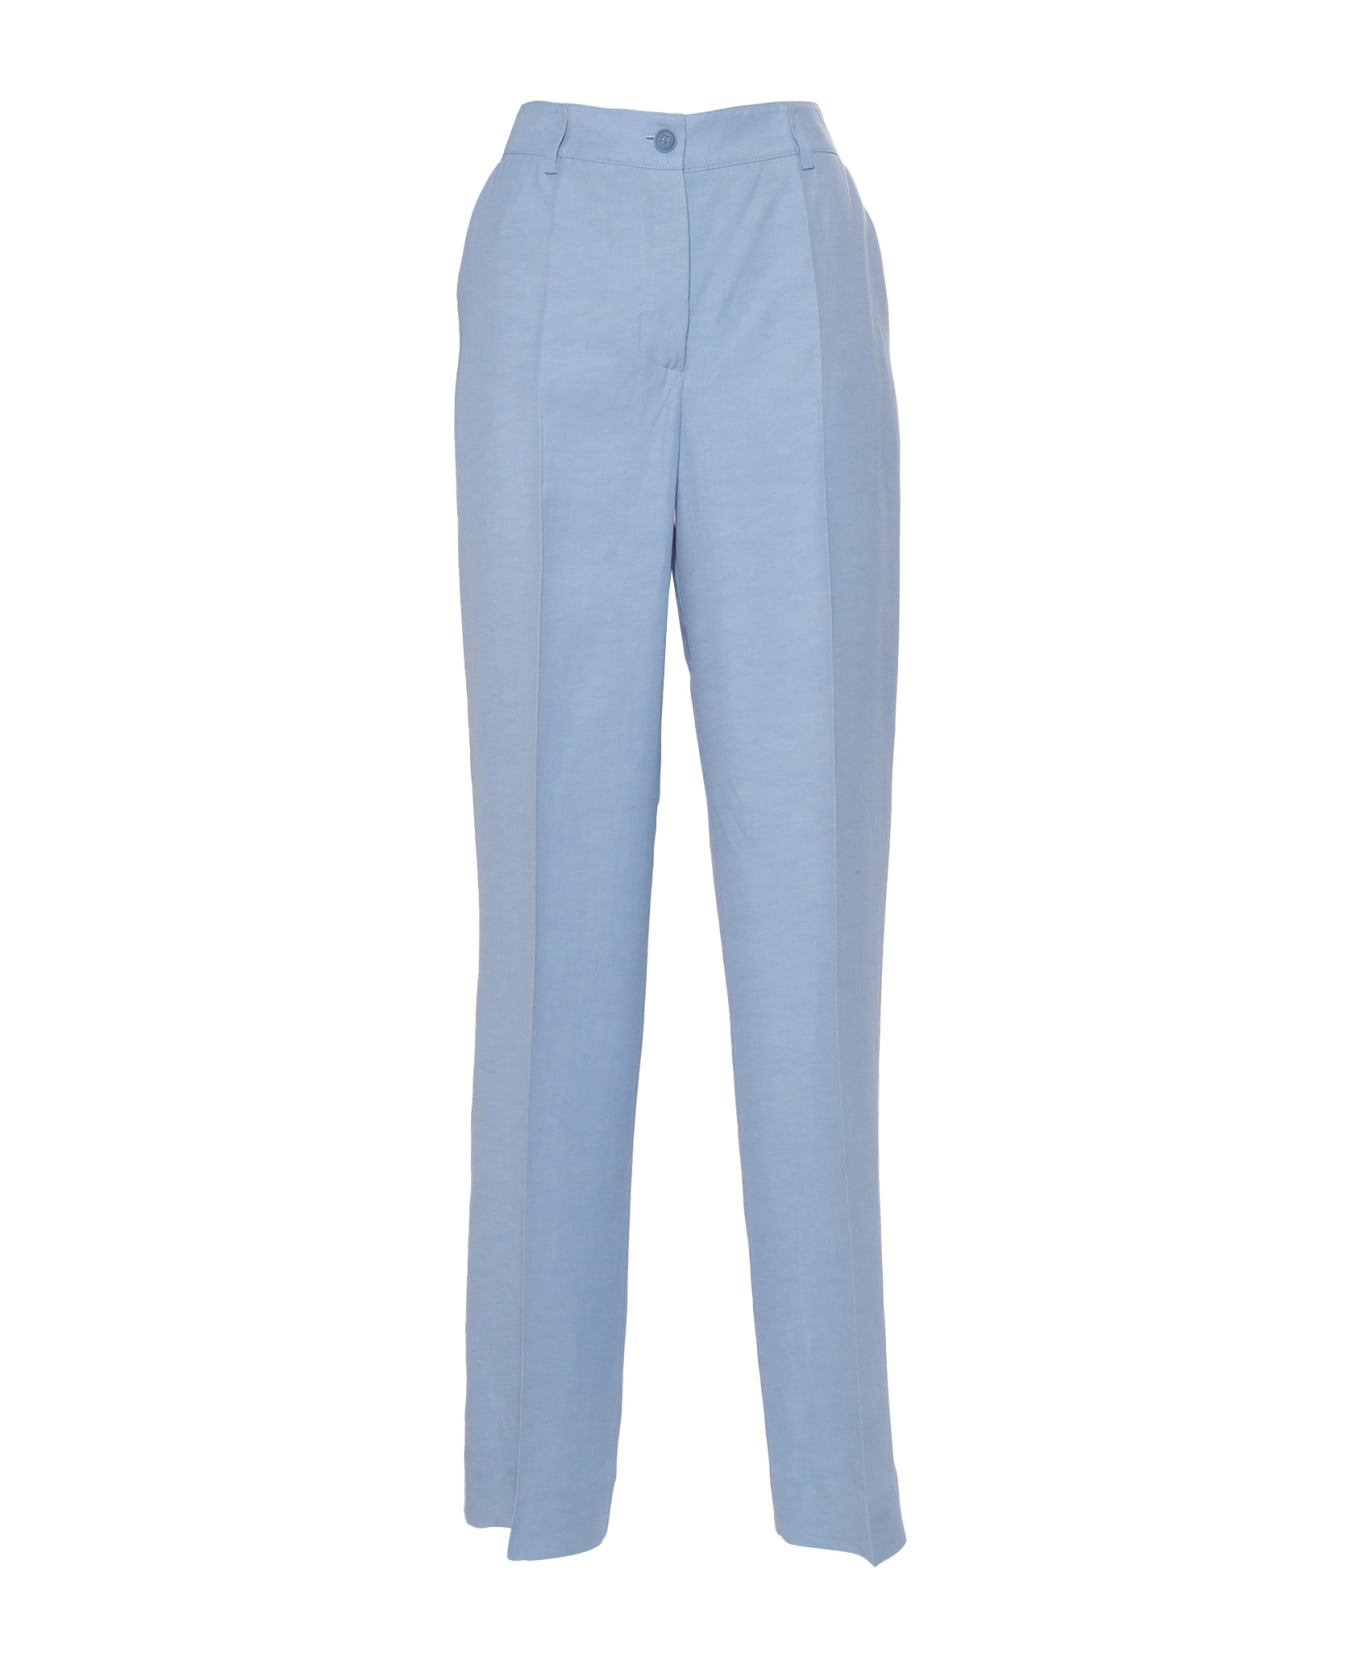 Parosh Pantalone Elegante Donna - LIGHT BLUE